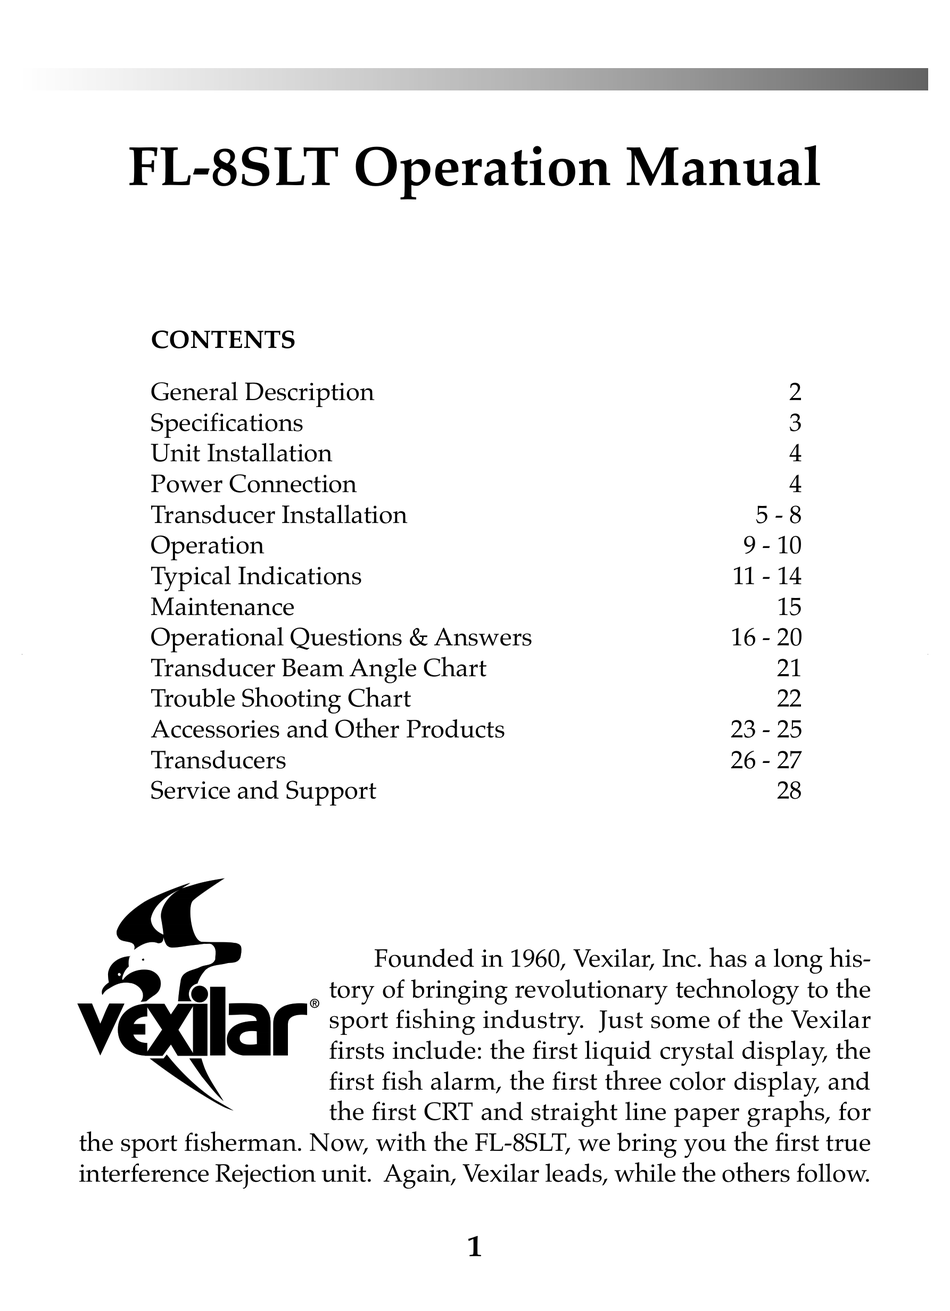 VEXILAR FL-8SLT OPERATION MANUAL Pdf Download | ManualsLib